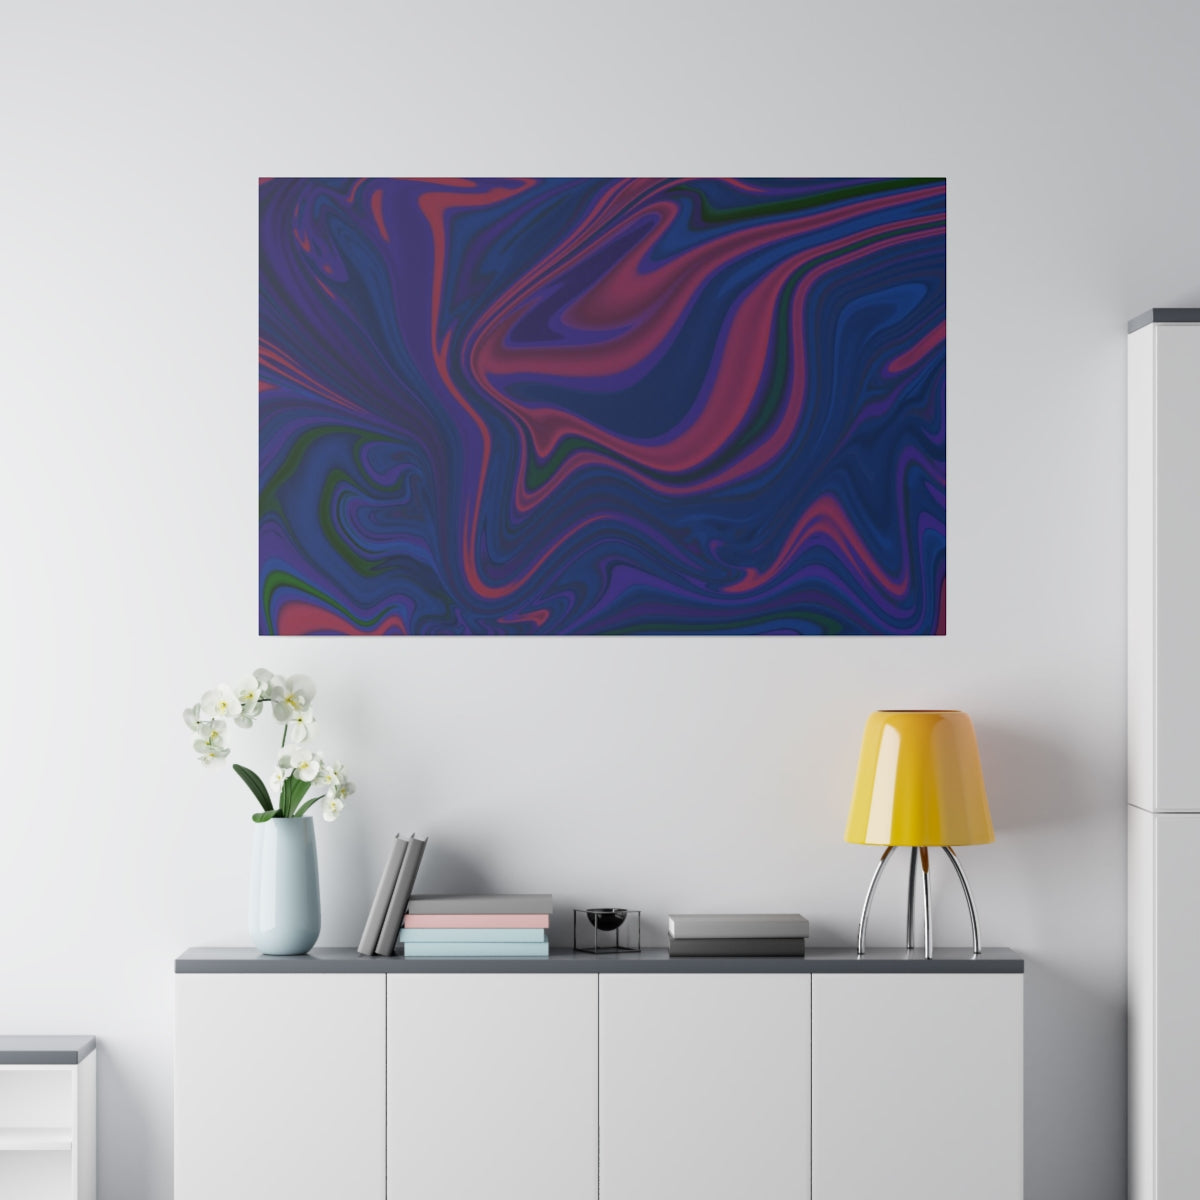 Velvet Mercury | 36x24 Inch | Fluid Abstract | Contemporary Wall Art | Canvas